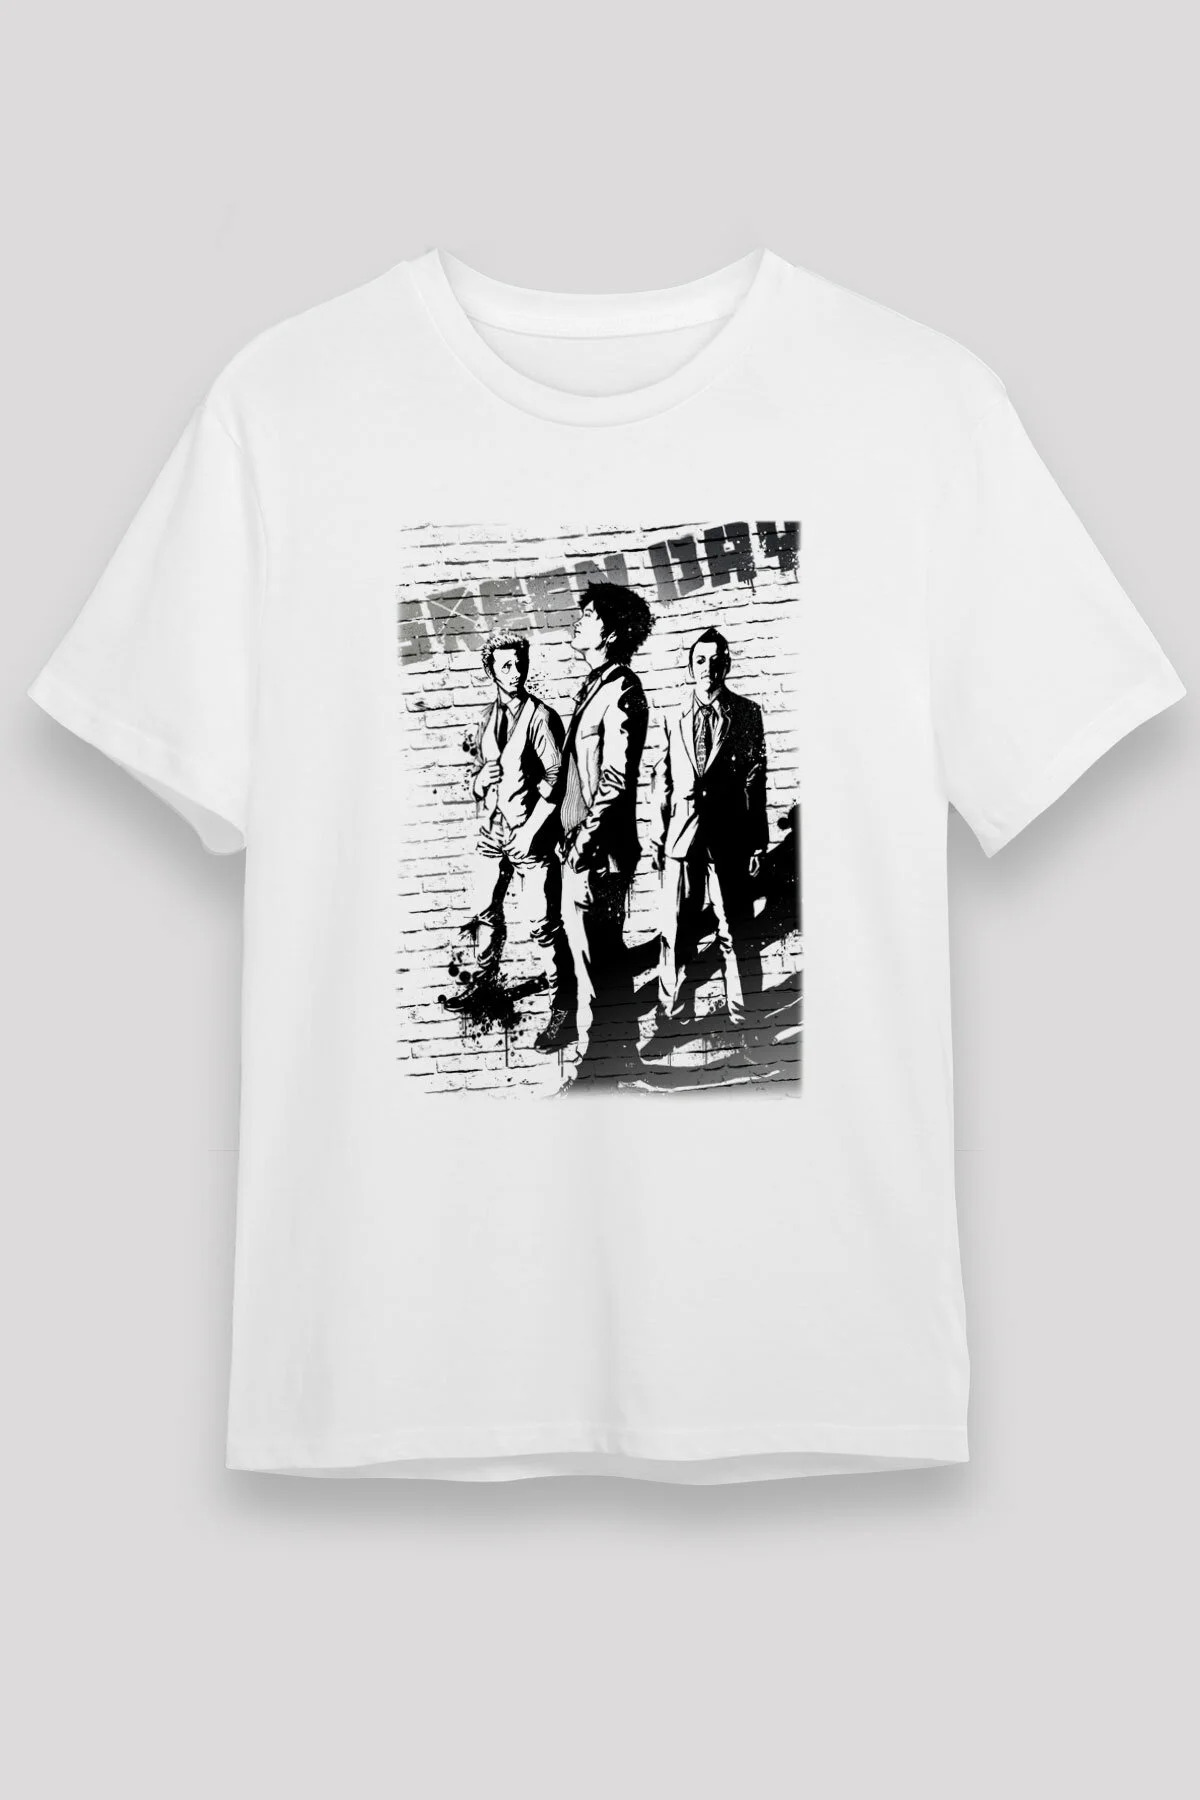 Green Day T shirt , Music Band ,Unisex Tshirt 20